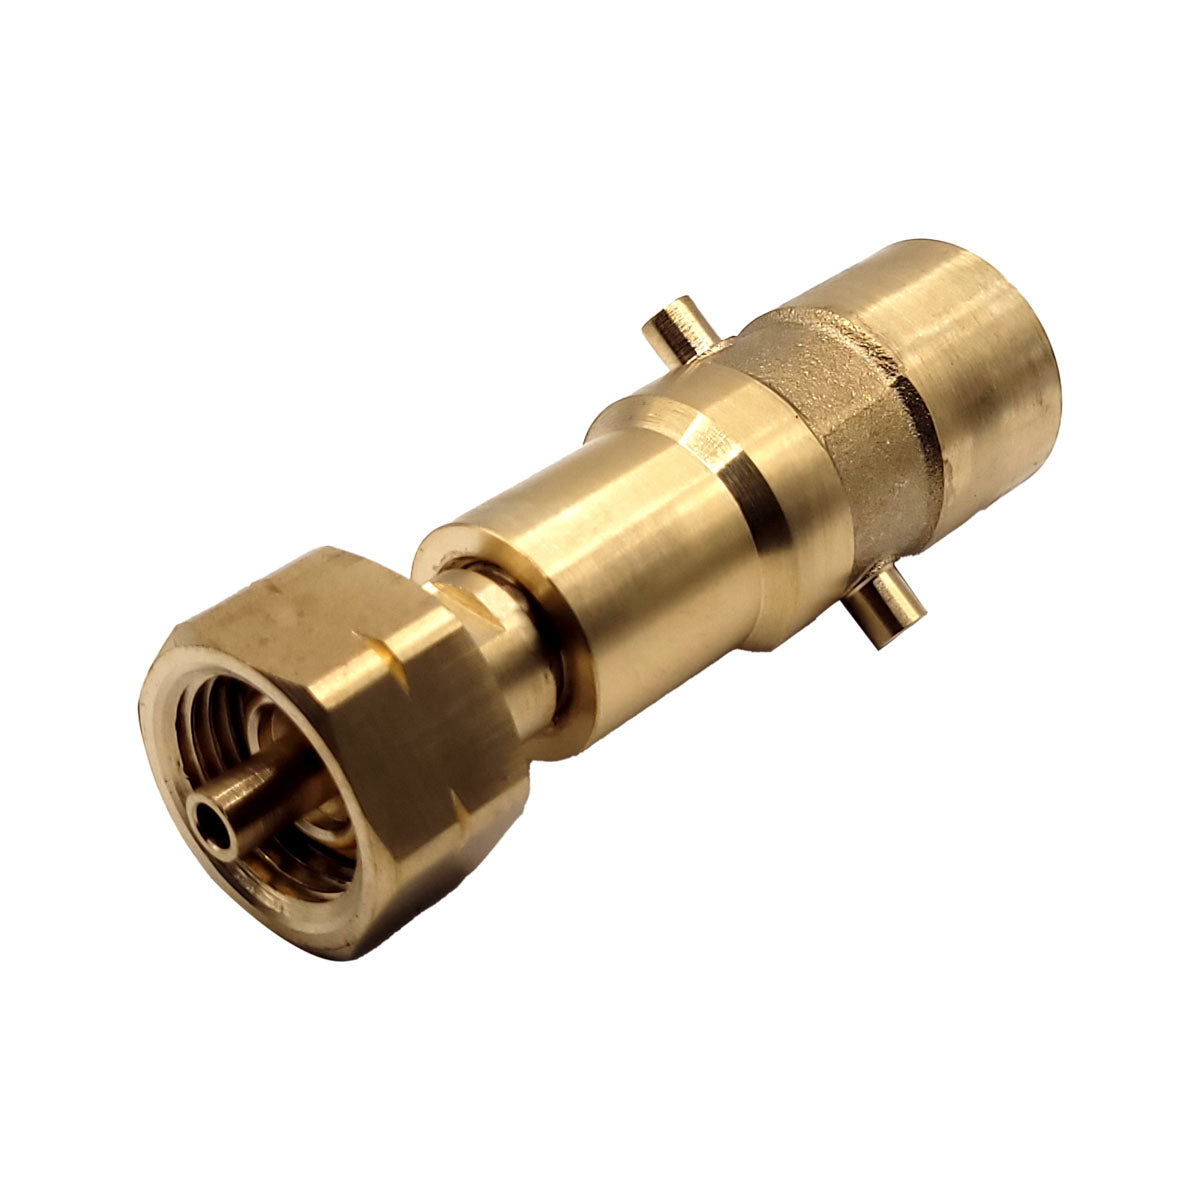 LPG GPL M22 European Bayonet Gas Bottle Adapter To Refill Fill in UK Gas  Stations